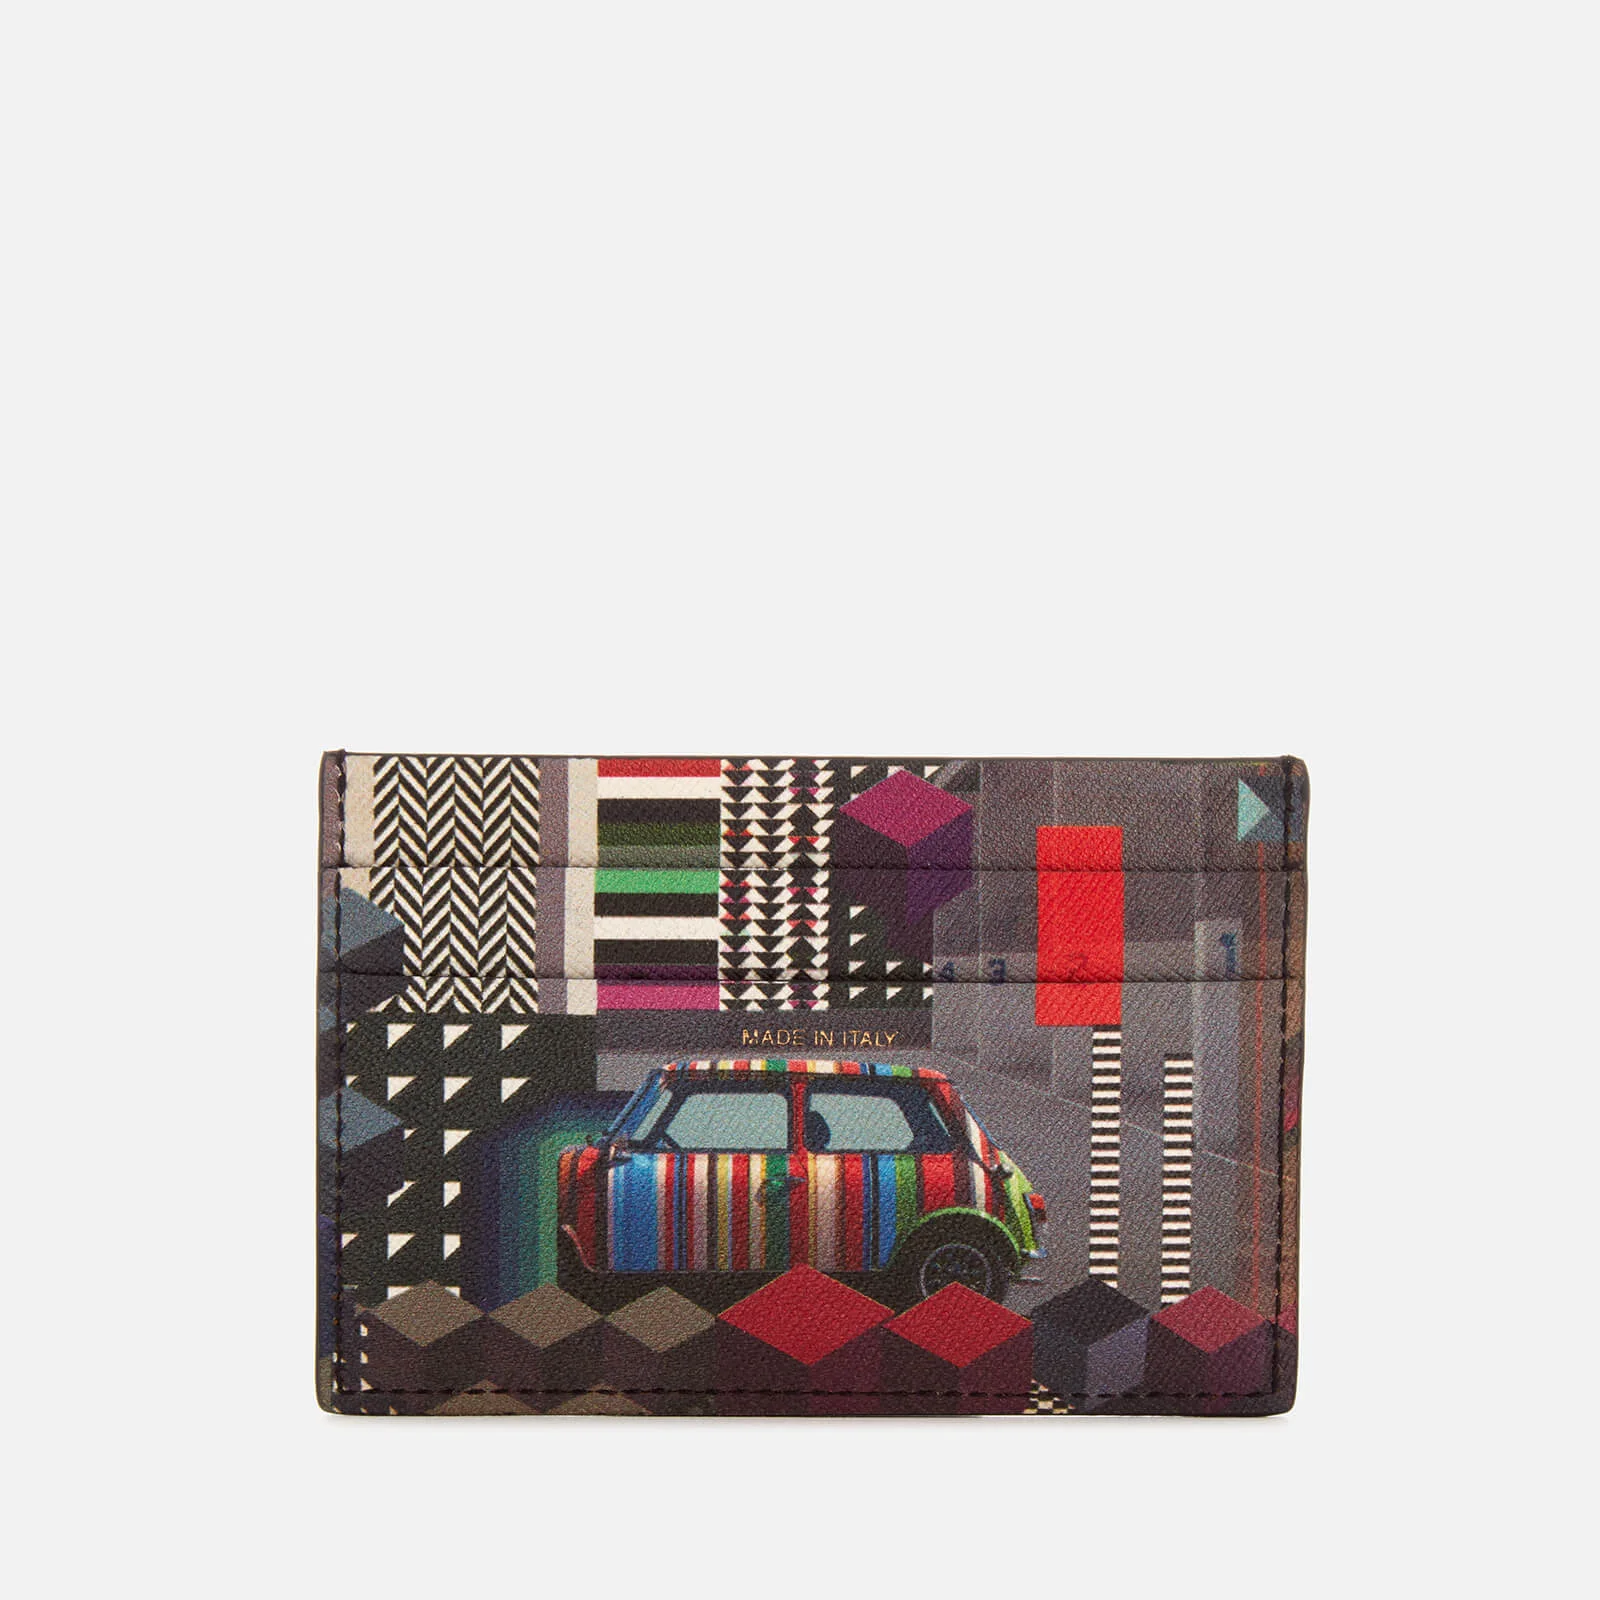 Paul Smith Accessories Men's Mini Print Credit Card Case - Black Image 1